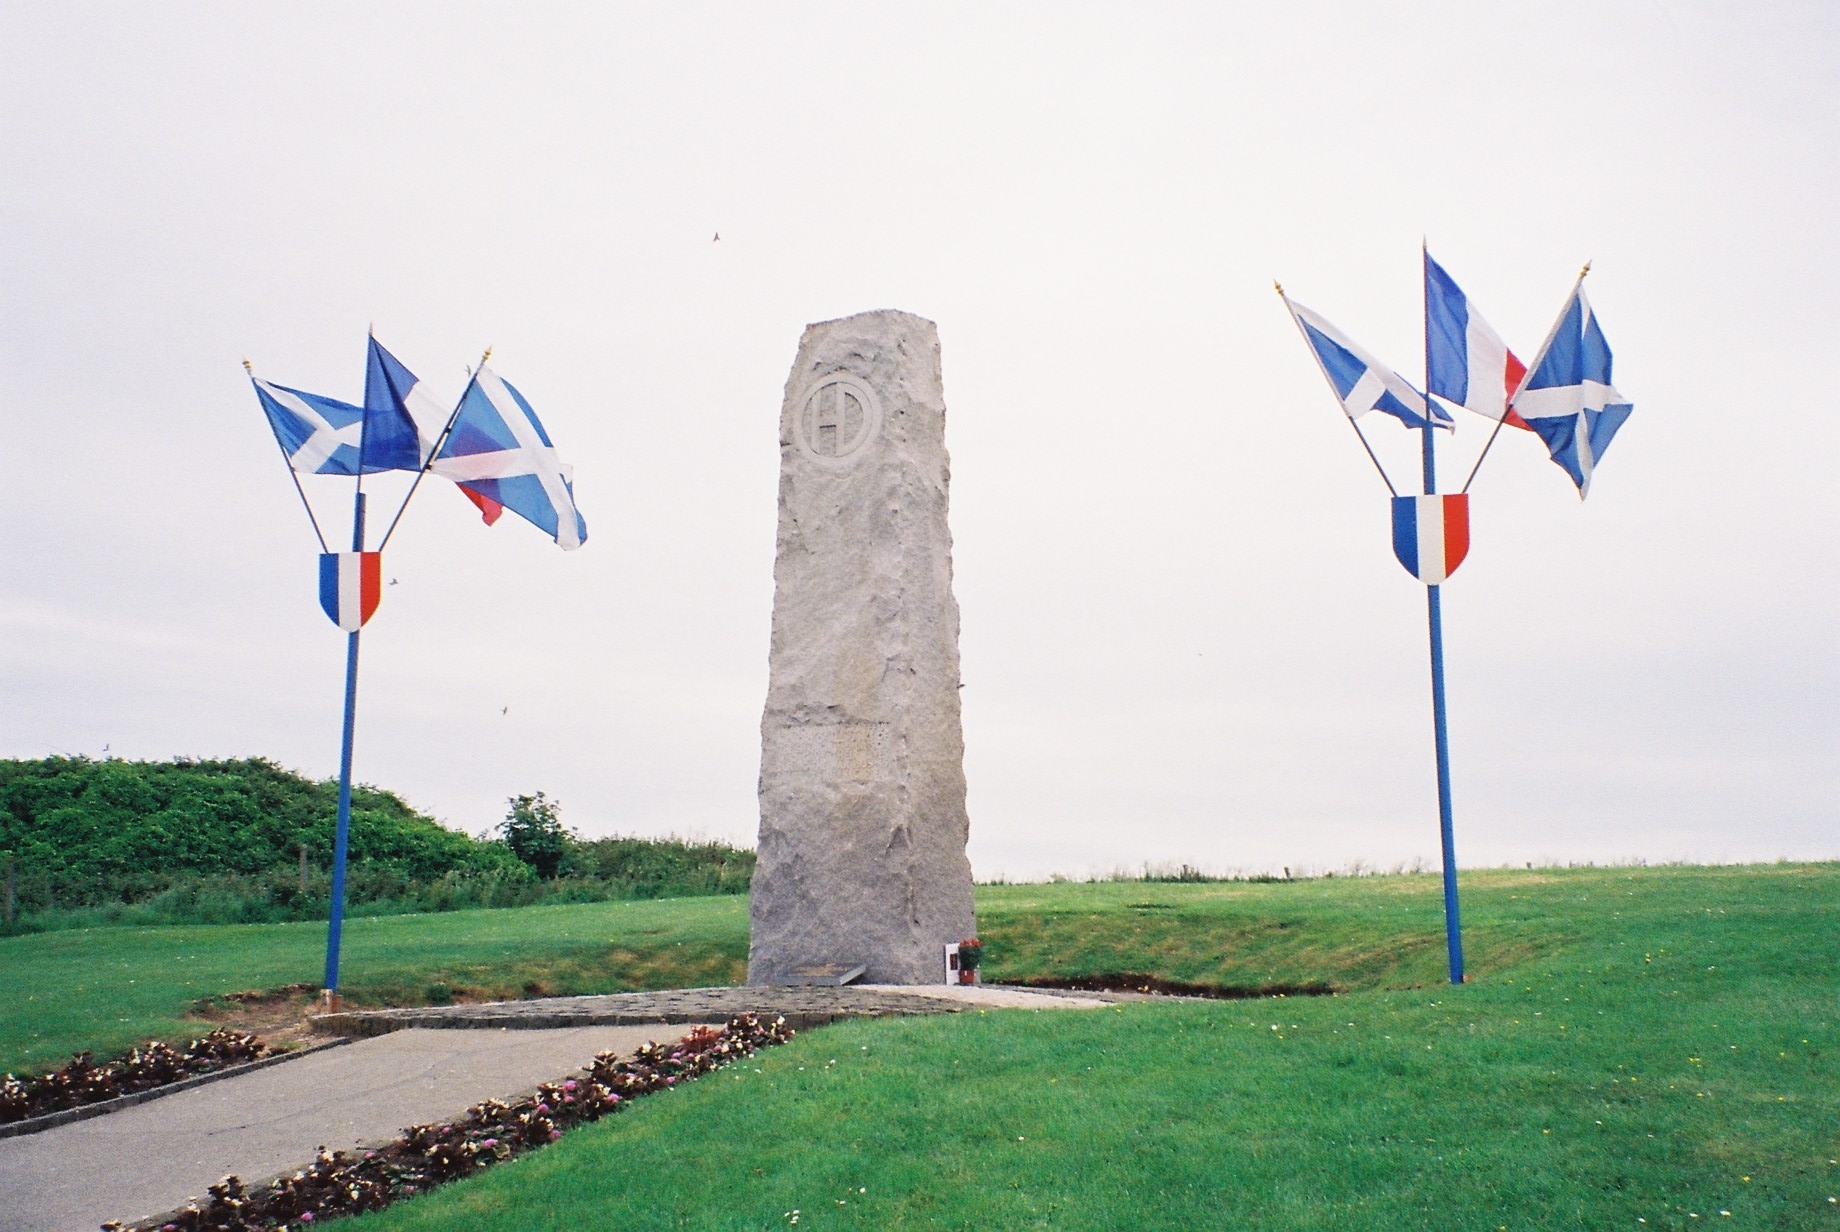 51st HD monument (photo taken June 2009)